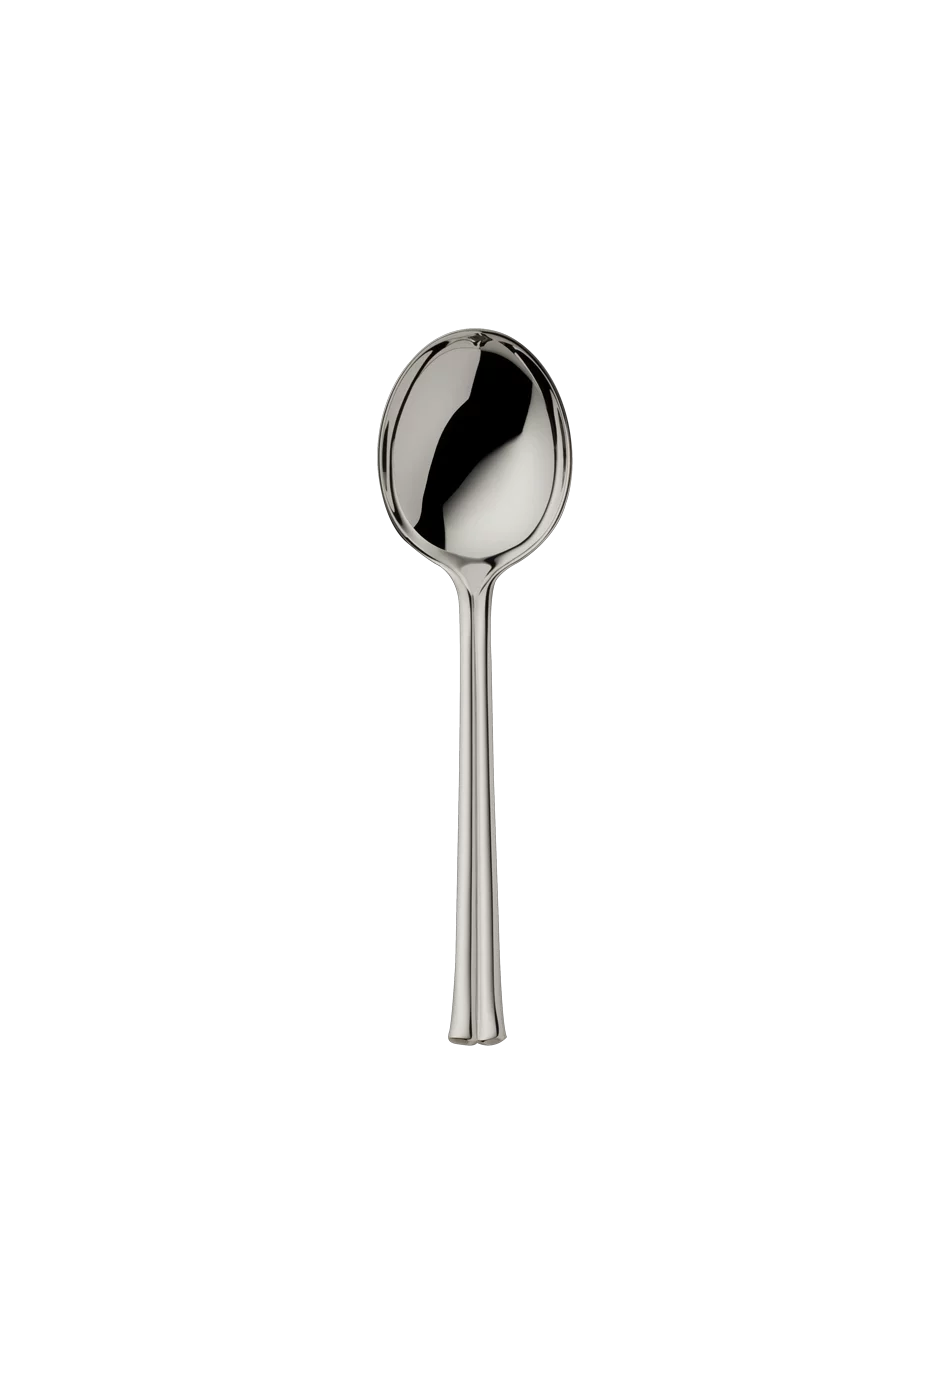 Viva Cream Spoon (Broth Spoon) (150g massive silverplated)